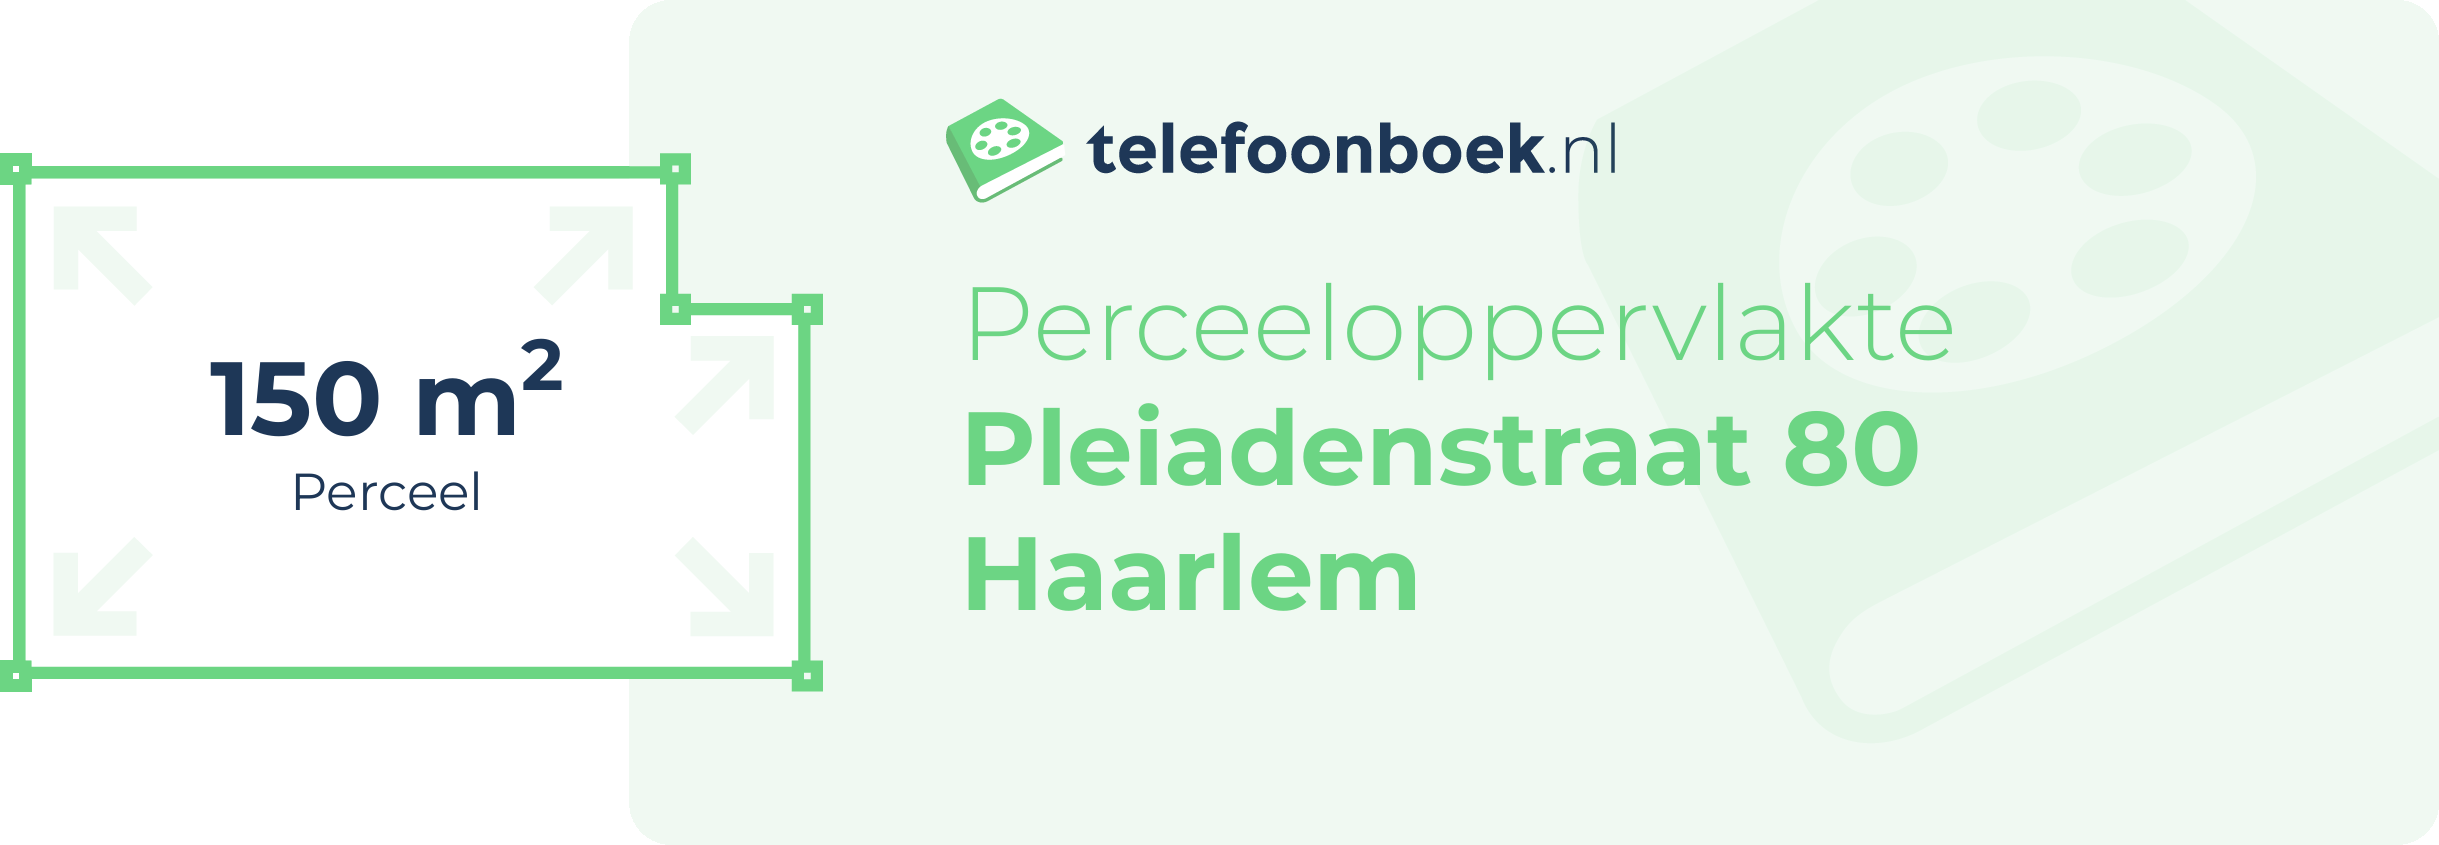 Perceeloppervlakte Pleiadenstraat 80 Haarlem